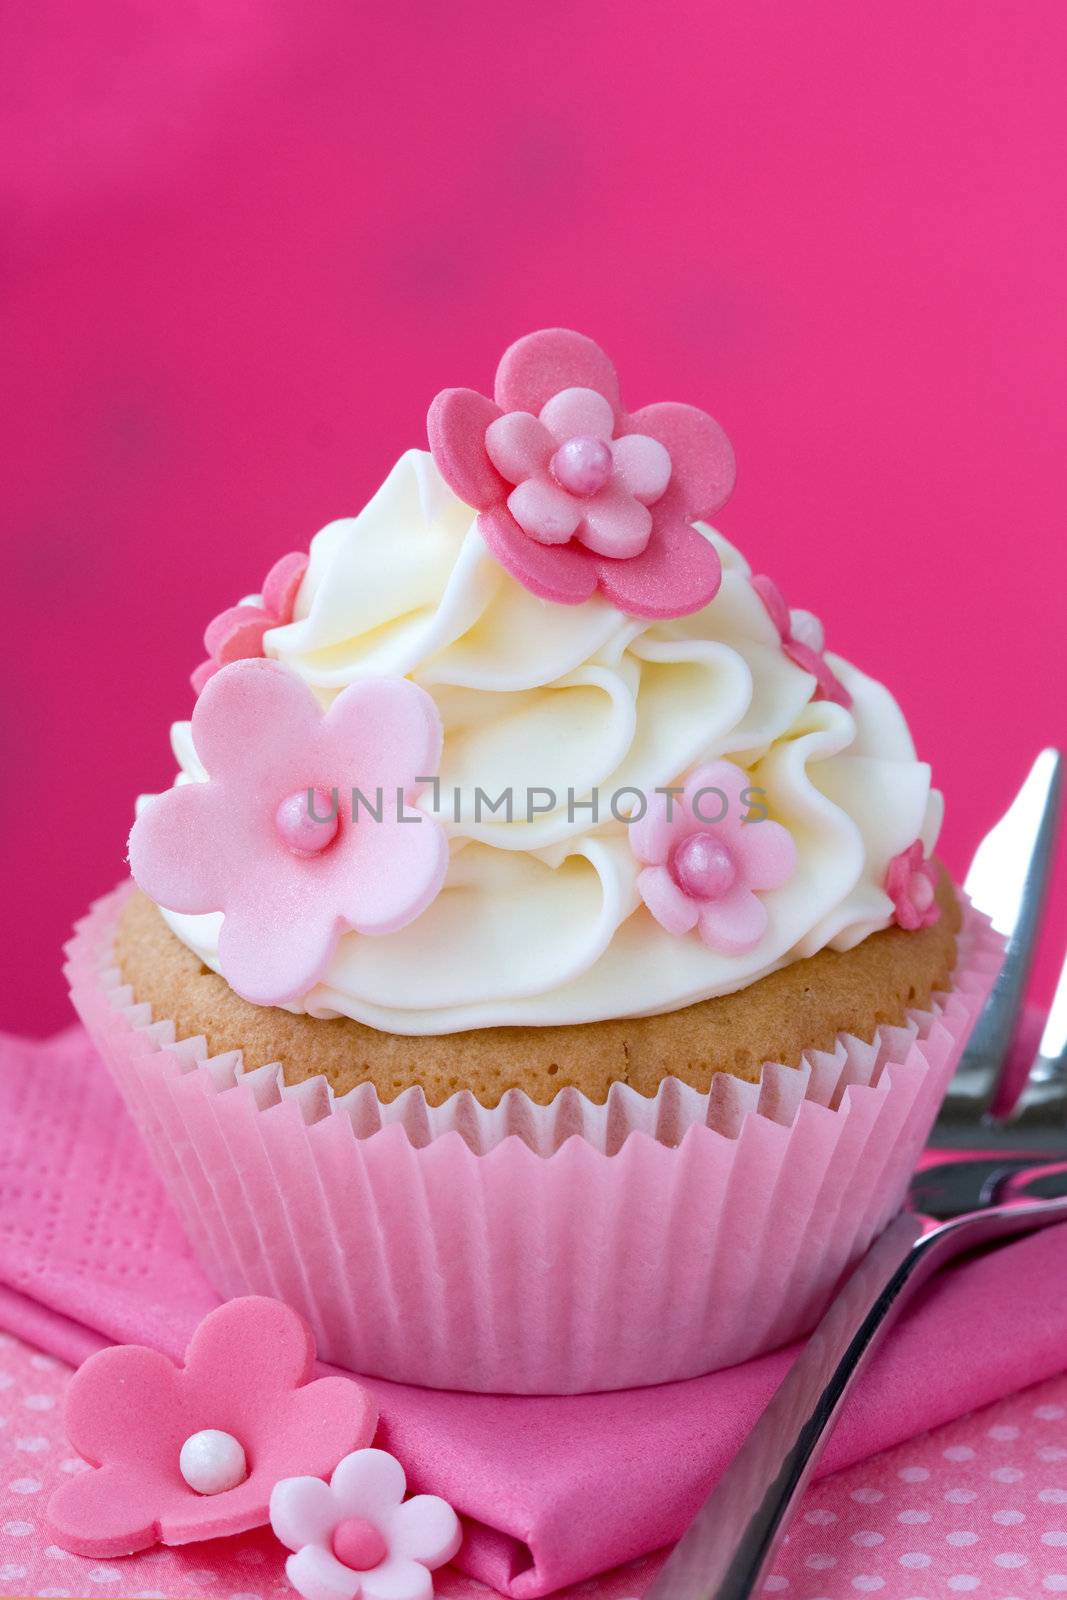 Flower cupcake by RuthBlack